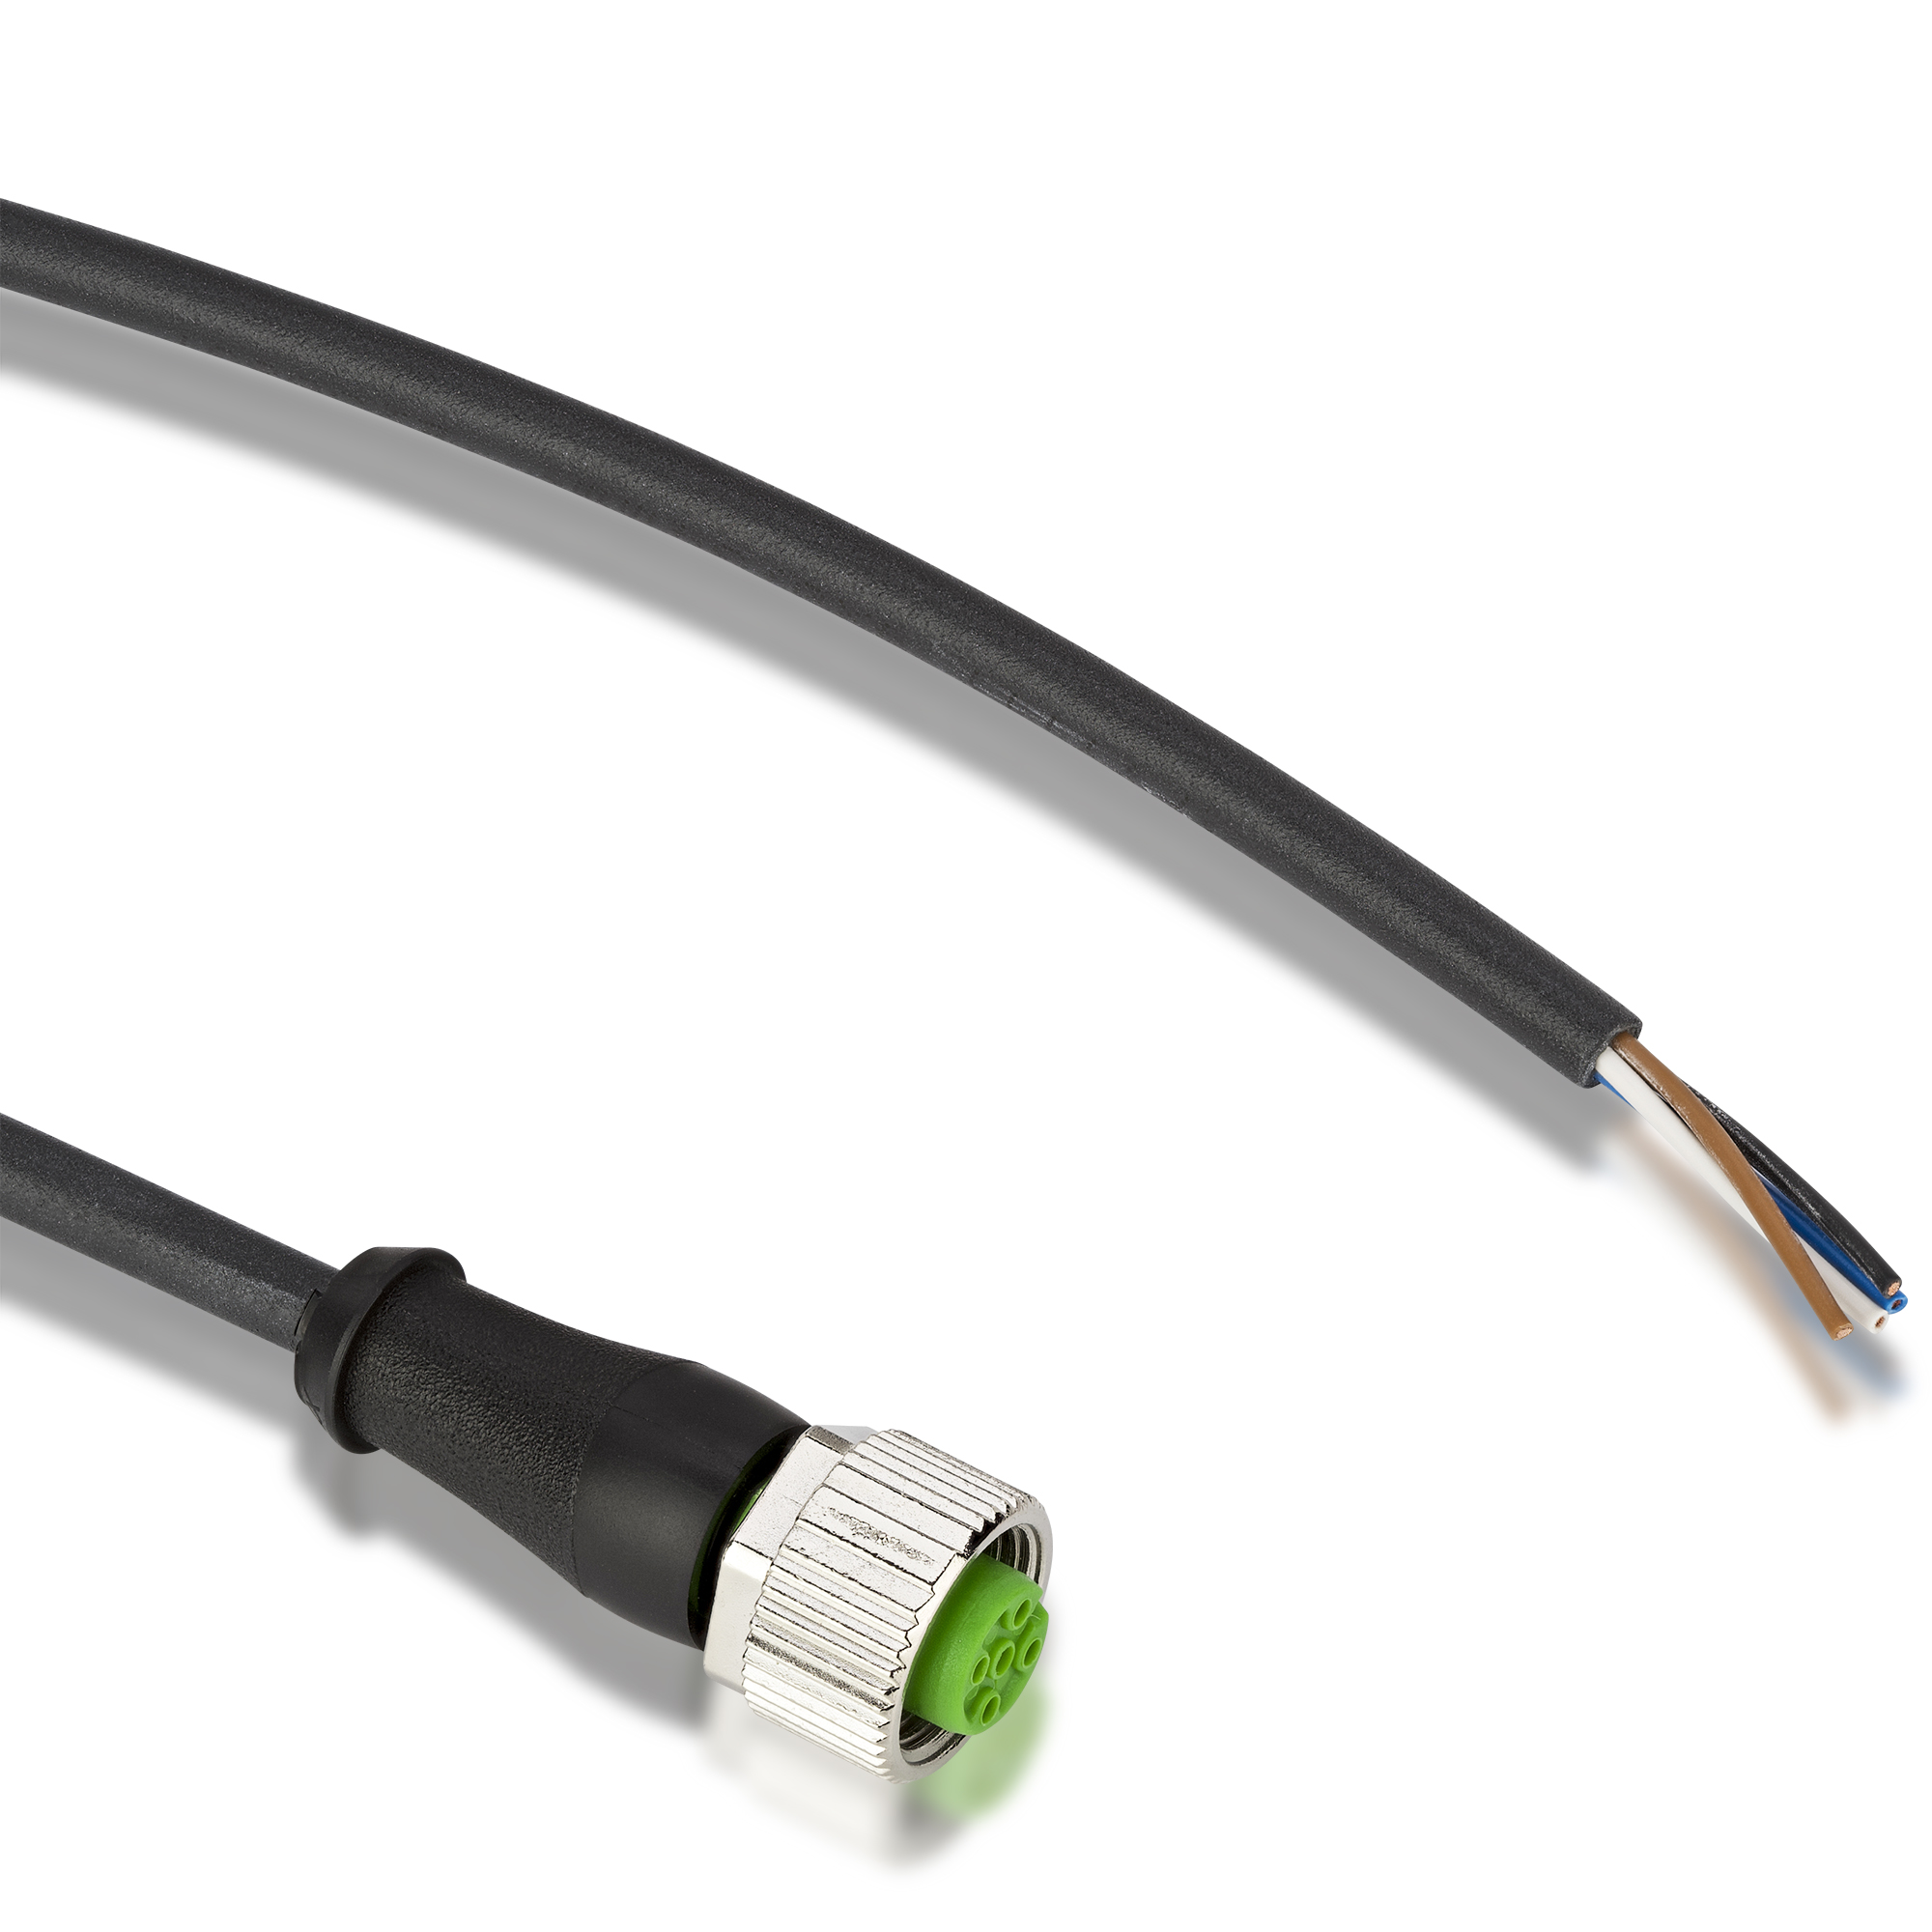 Cable M12x1; straight plug